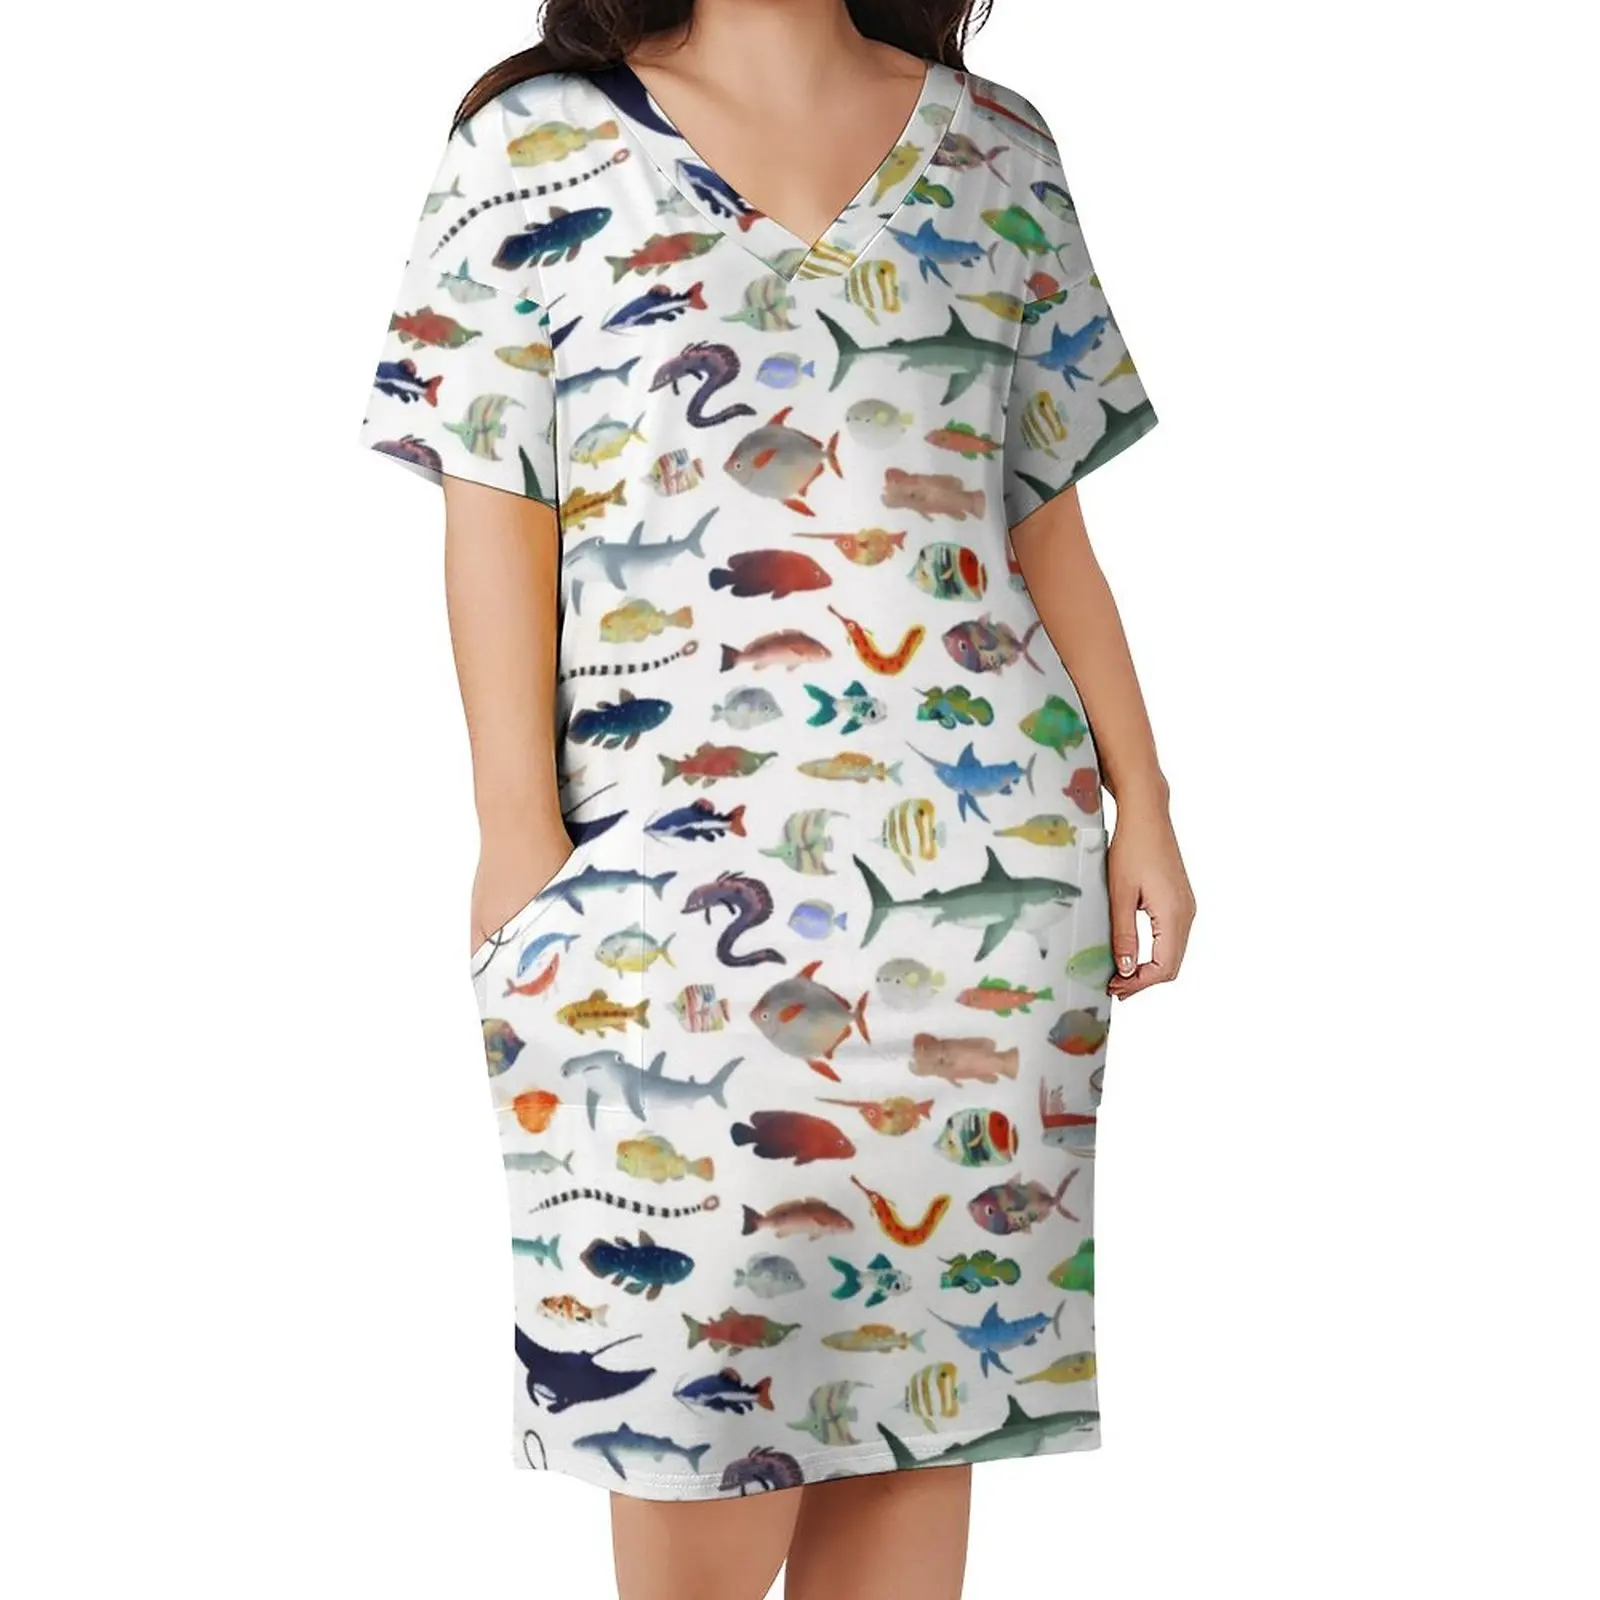 Great White Shark Dress Plus Size Ocean Life One Hundred Fish Print Streetwear Casual Dress Ladies Summer V Neck Trendy Dresses